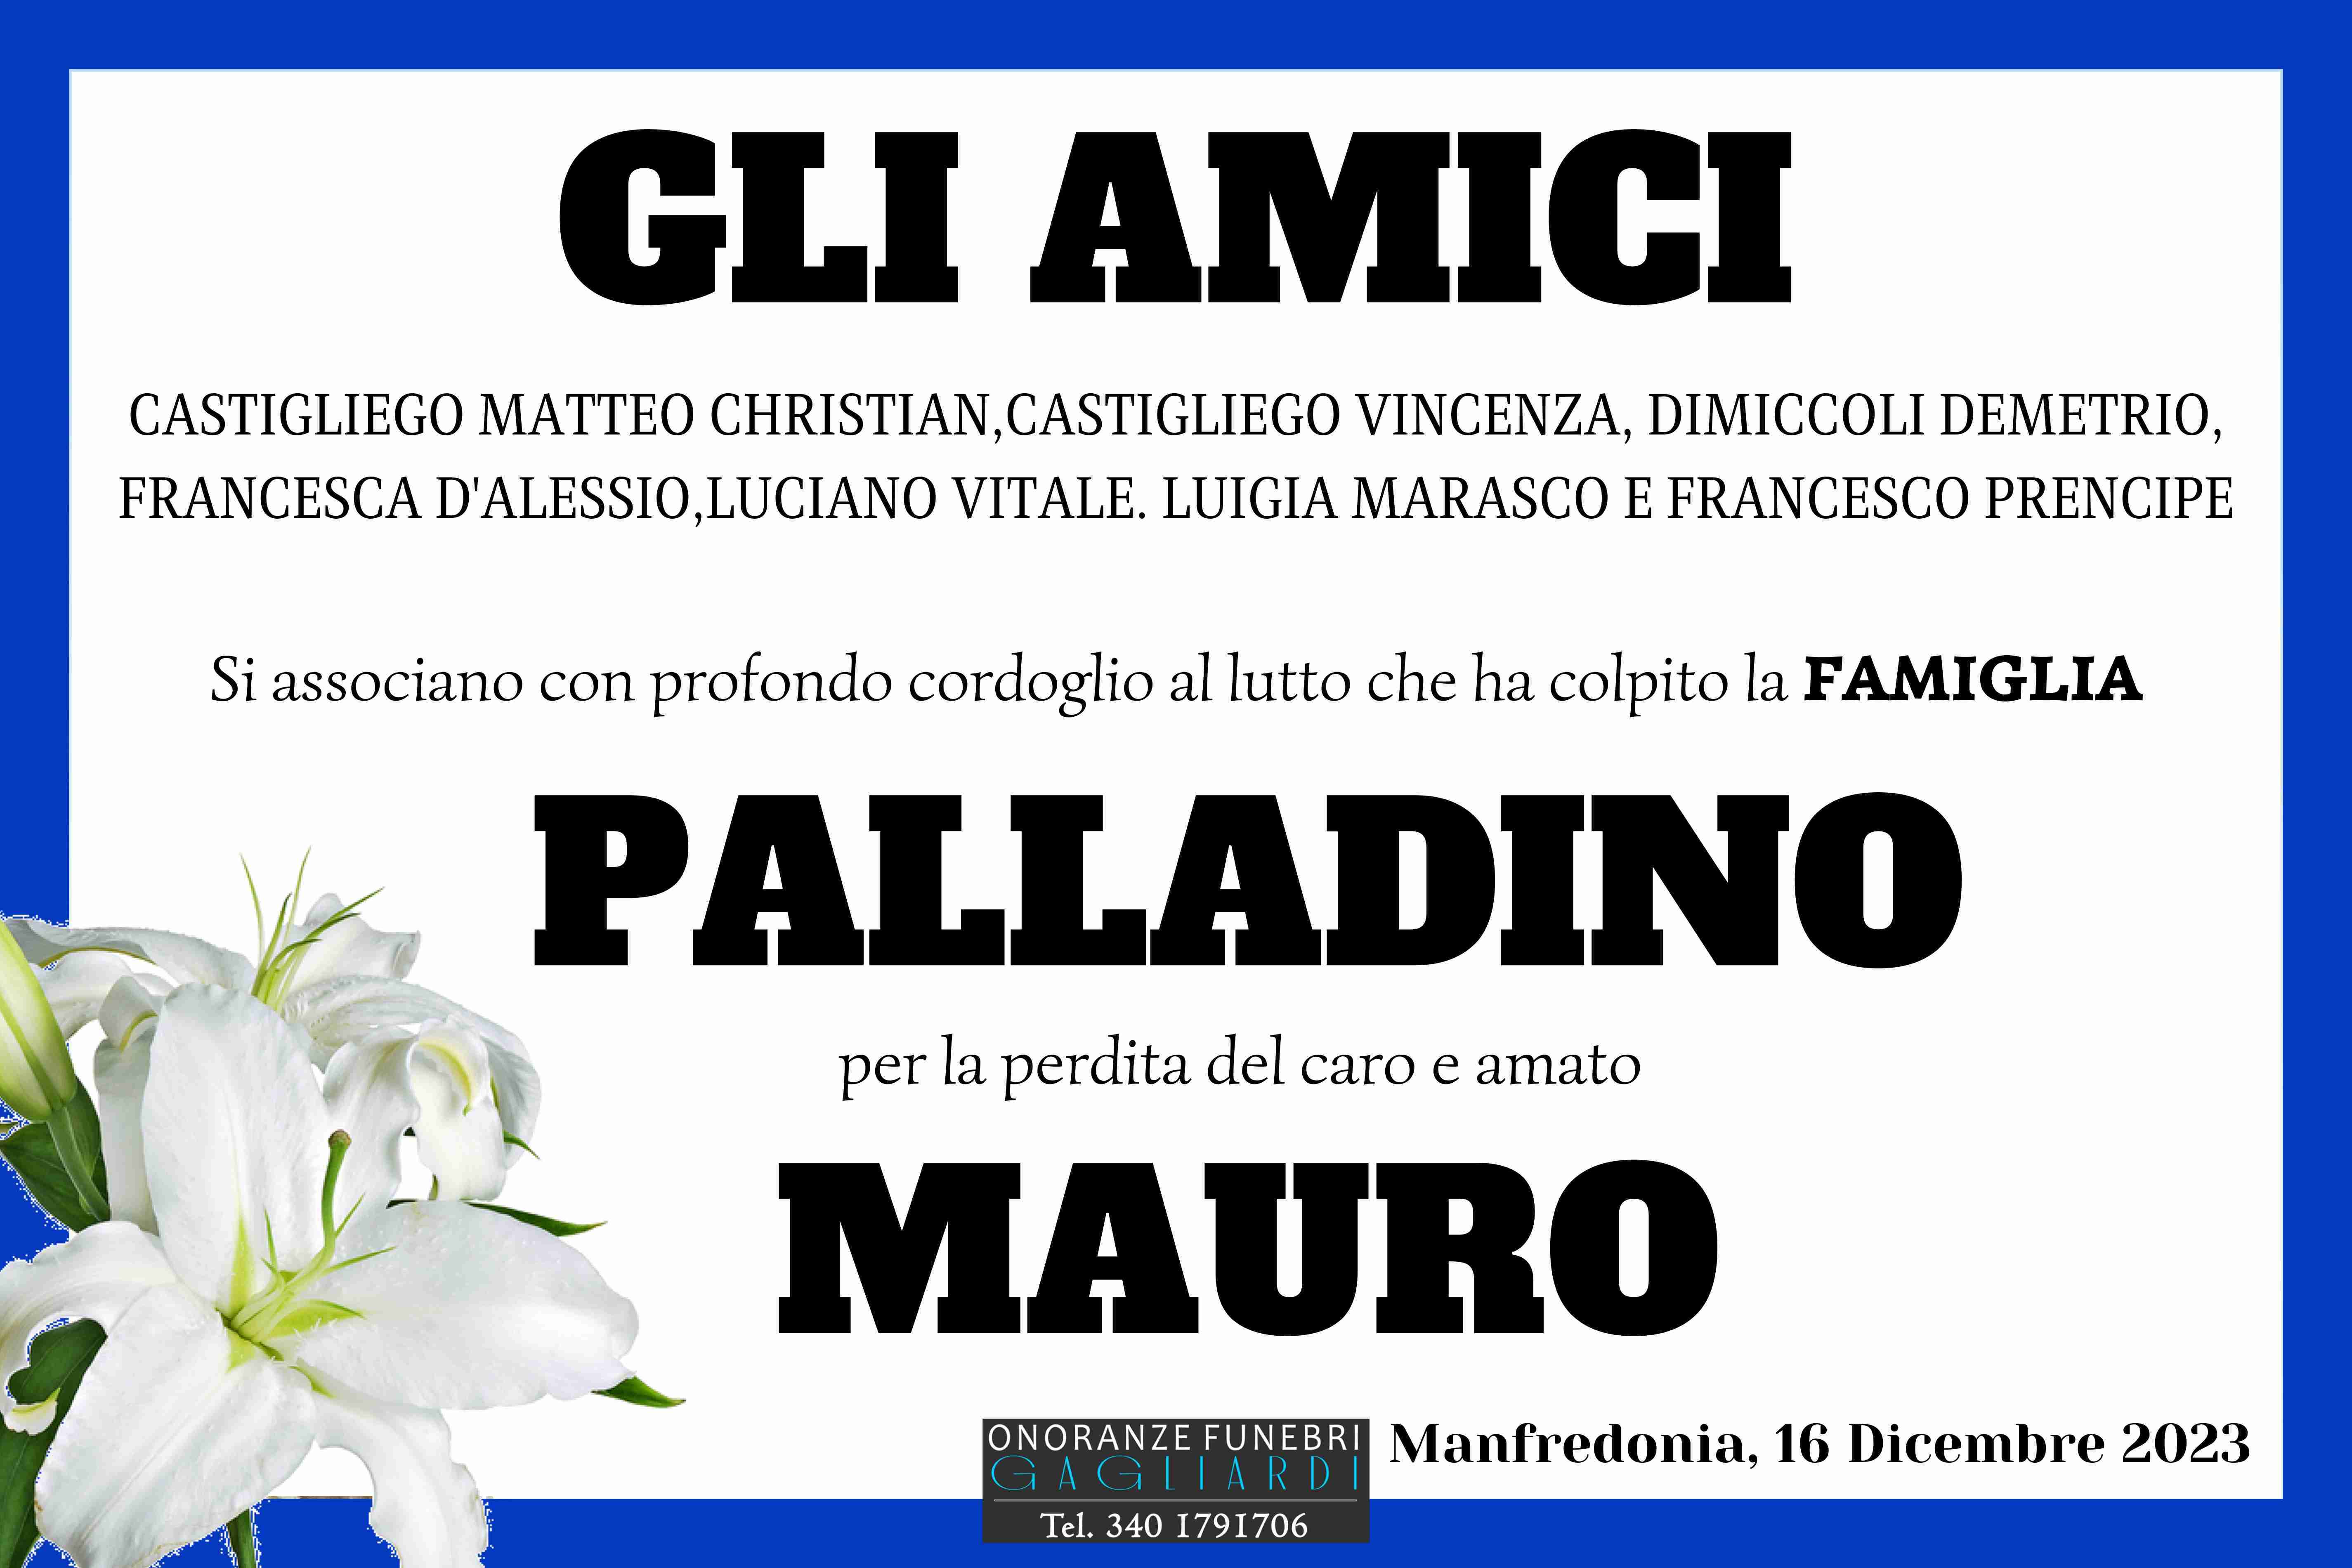 Mauro Palladino